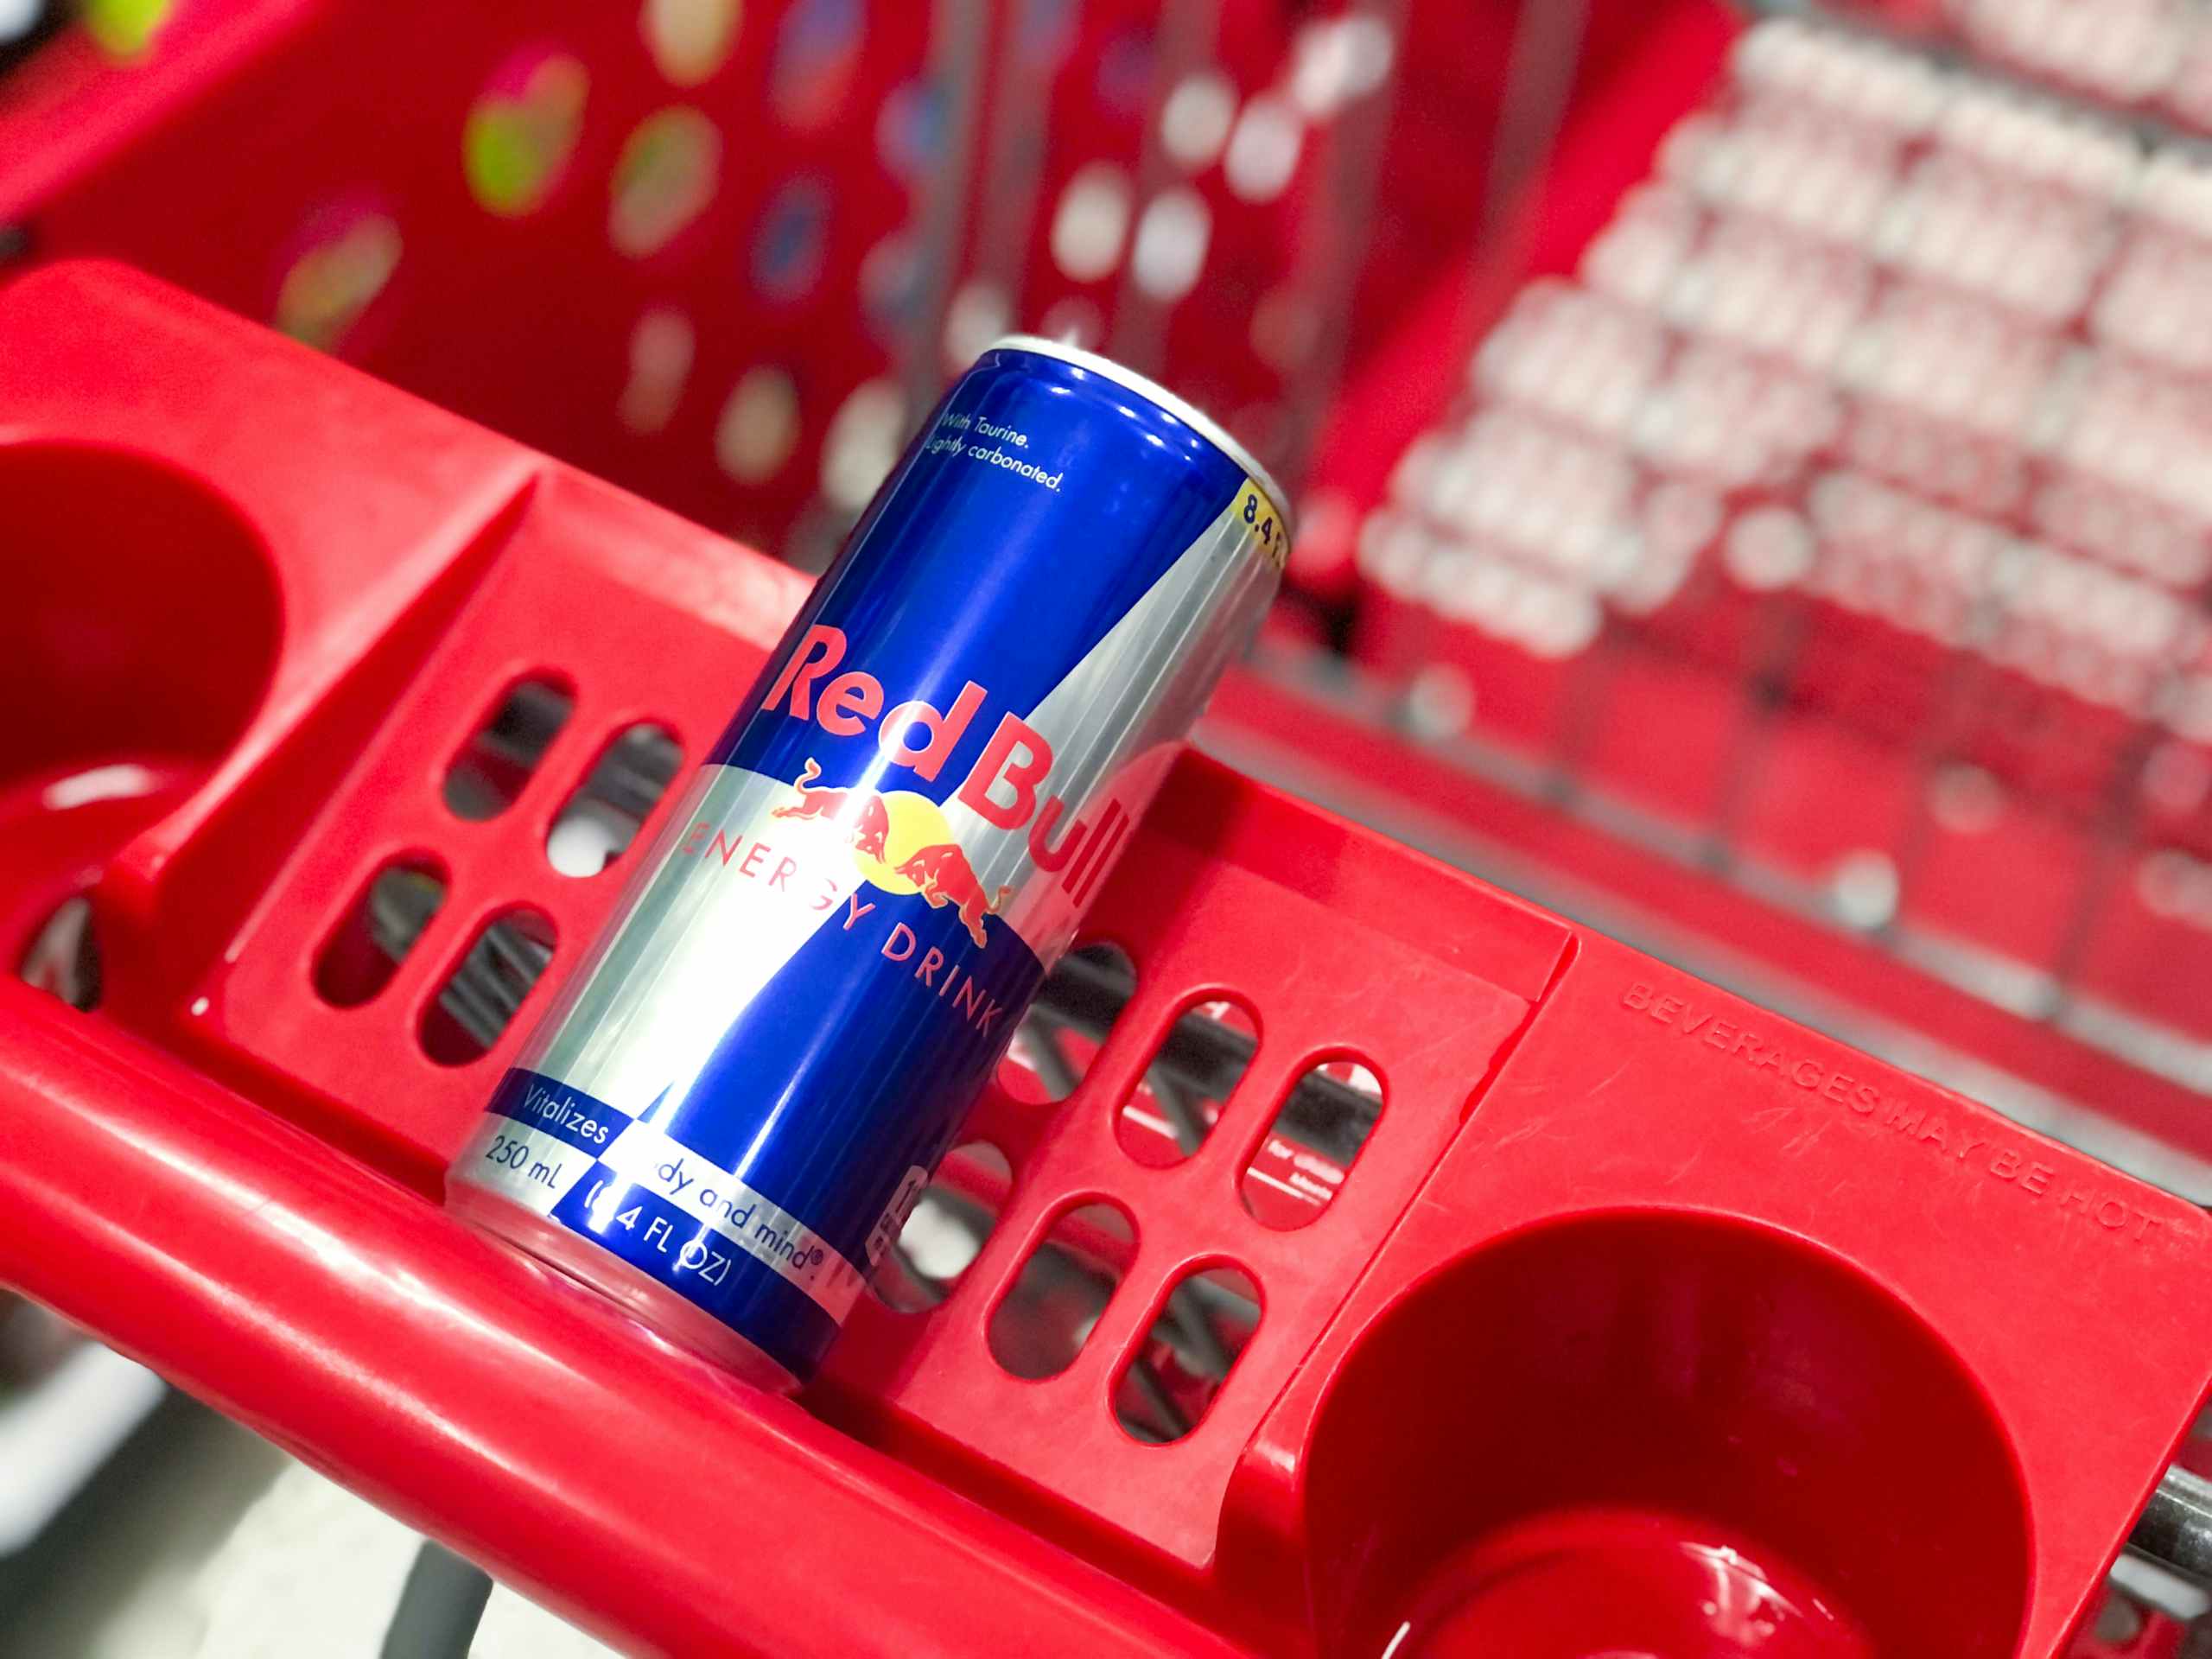 single Red Bull in Target shopping cart